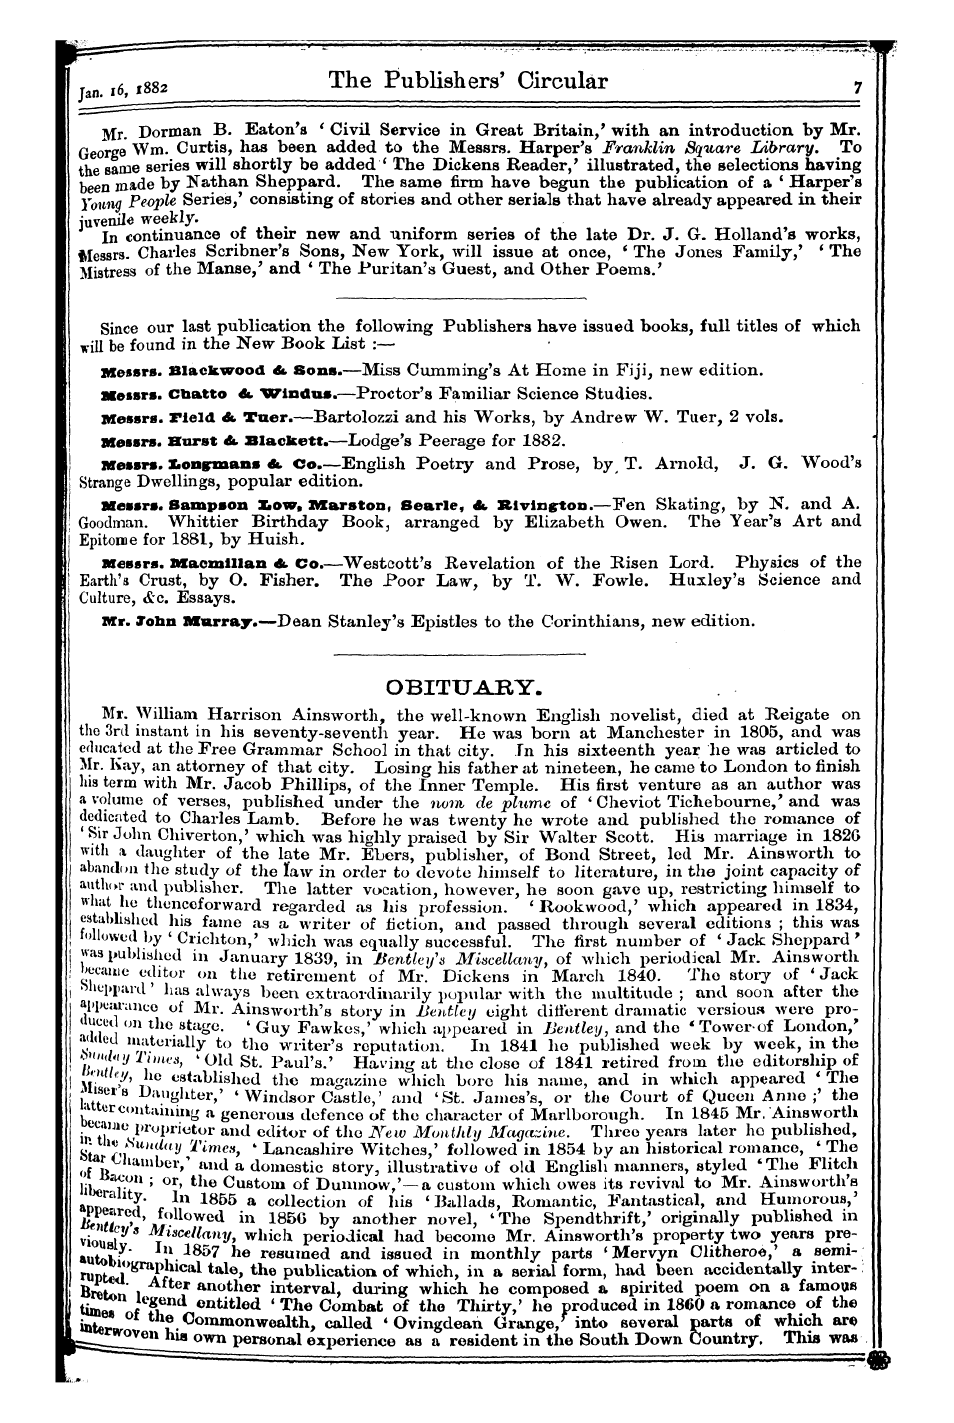 Publishers’ Circular (1880-1890): jS F Y, 1st edition - Obituaey.